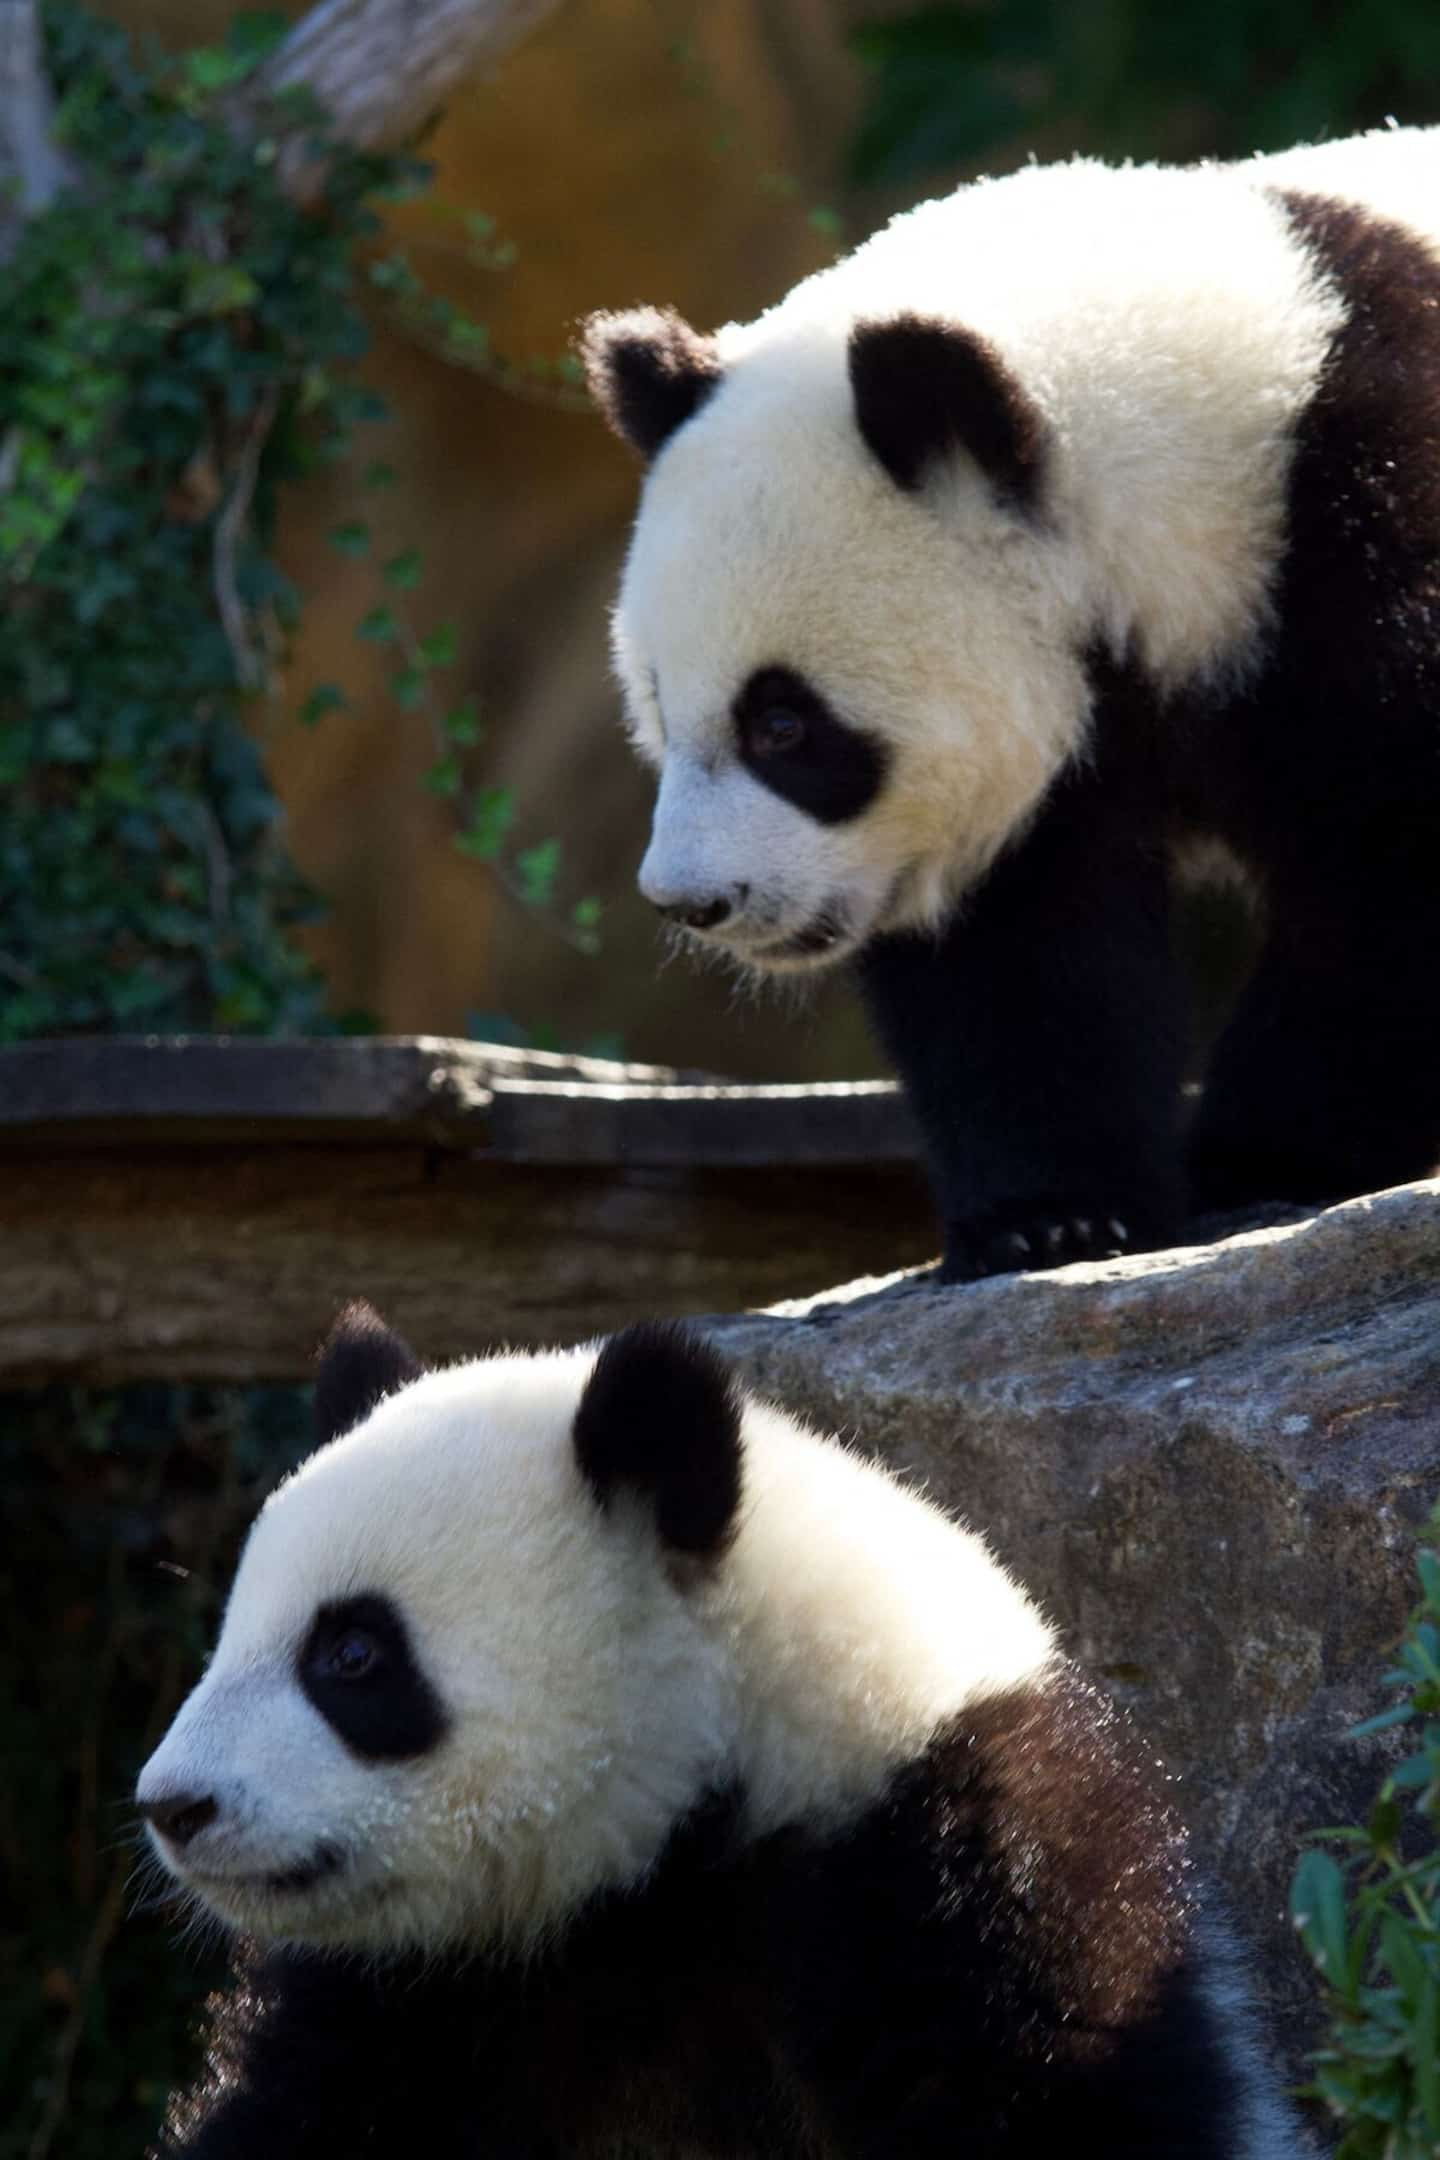 [PHOTOS] Adorable panda twins celebrate their first birthday